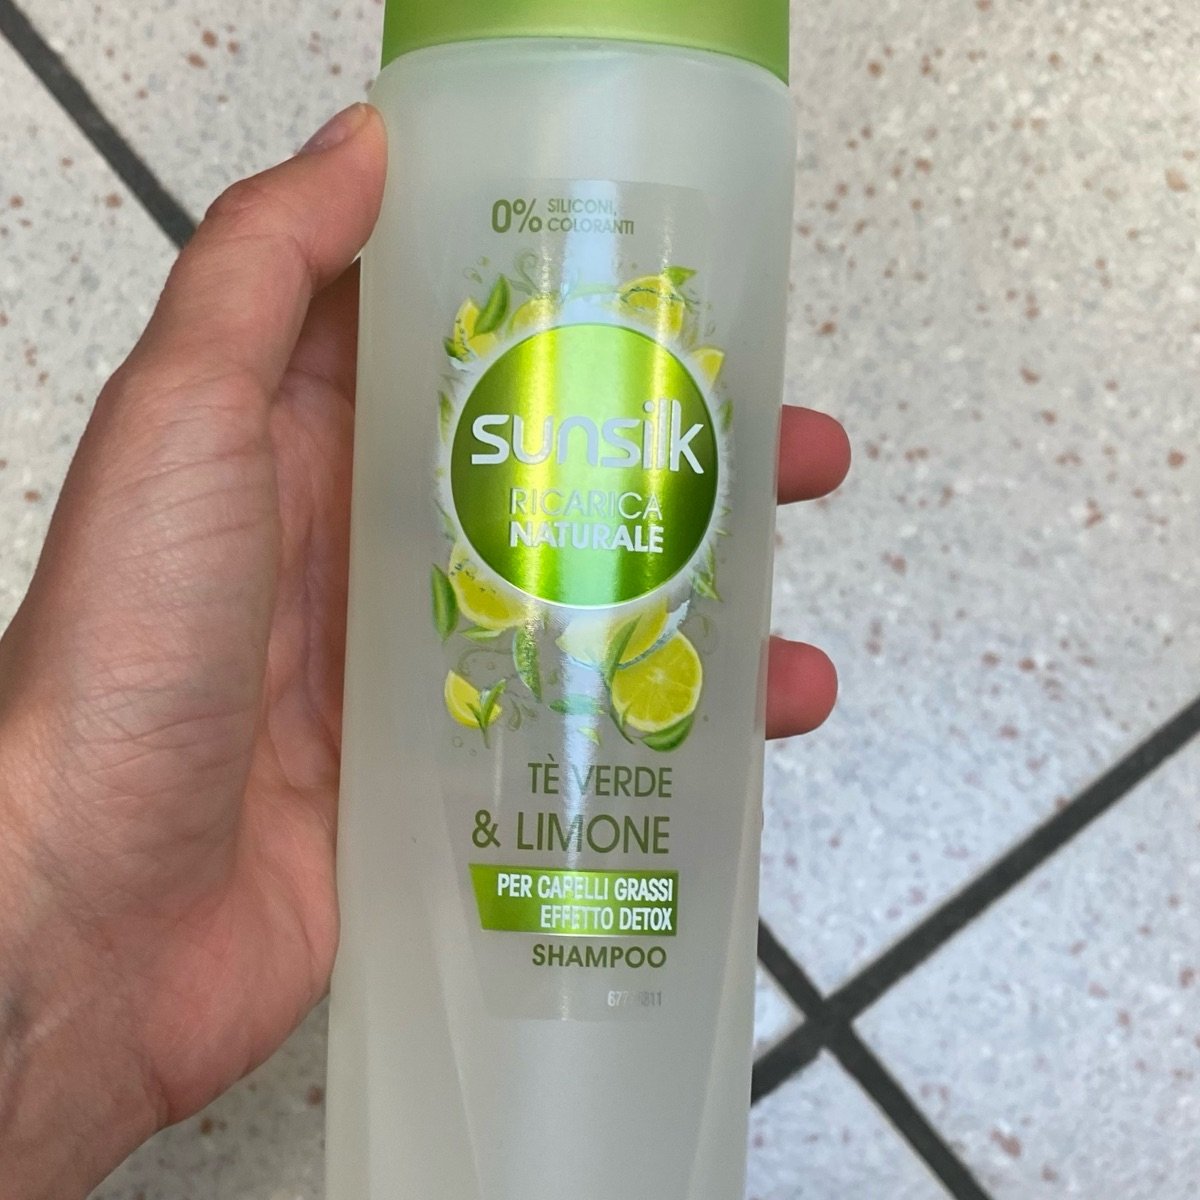 Sunsilk minerals Shampoo Tè Verde E Limone Review | abillion